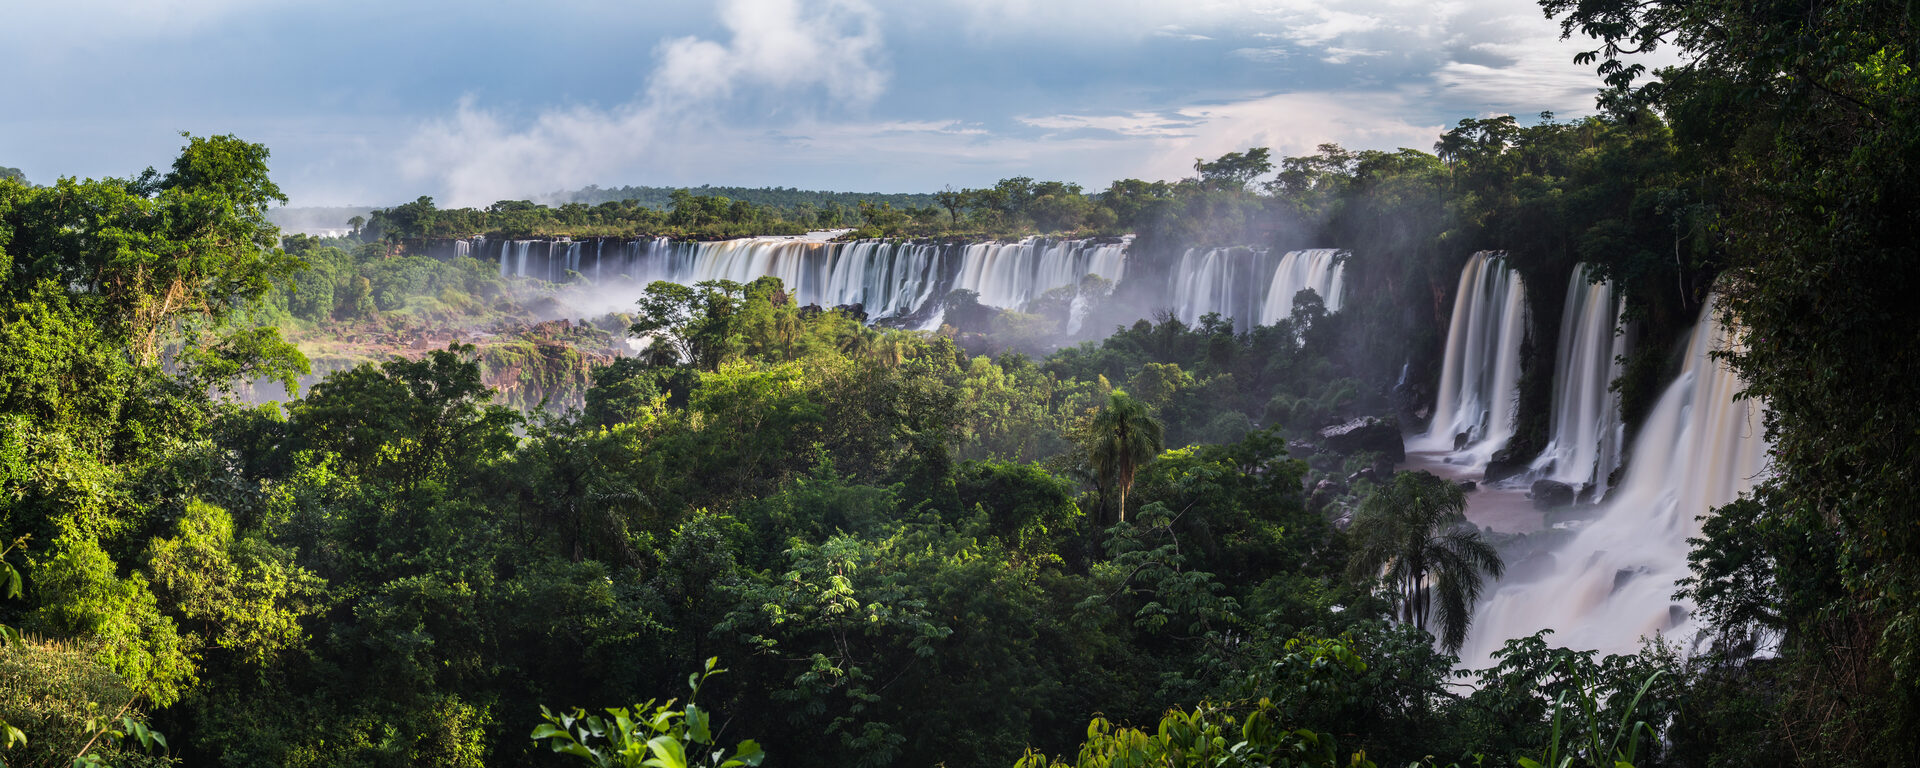 Argentina Travel Landscape Photography Iguazu Falls aka Iguassu Falls or Cataratas del Iguazu Misiones Province Argentina South America 2